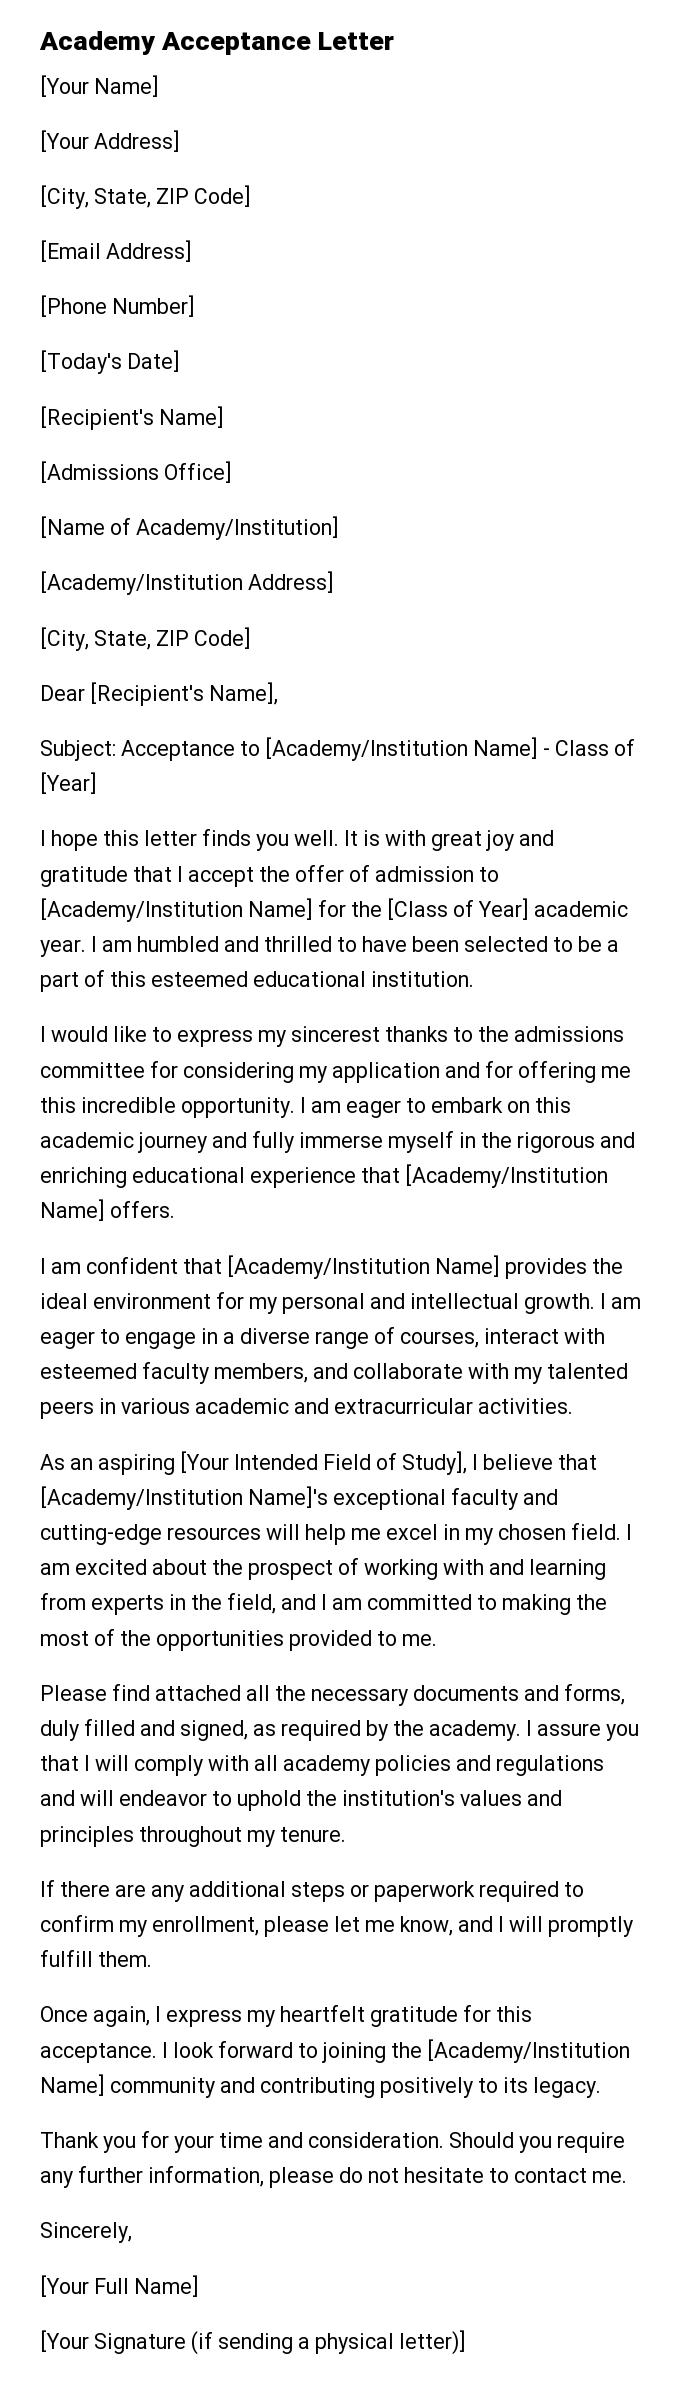 Academy Acceptance Letter